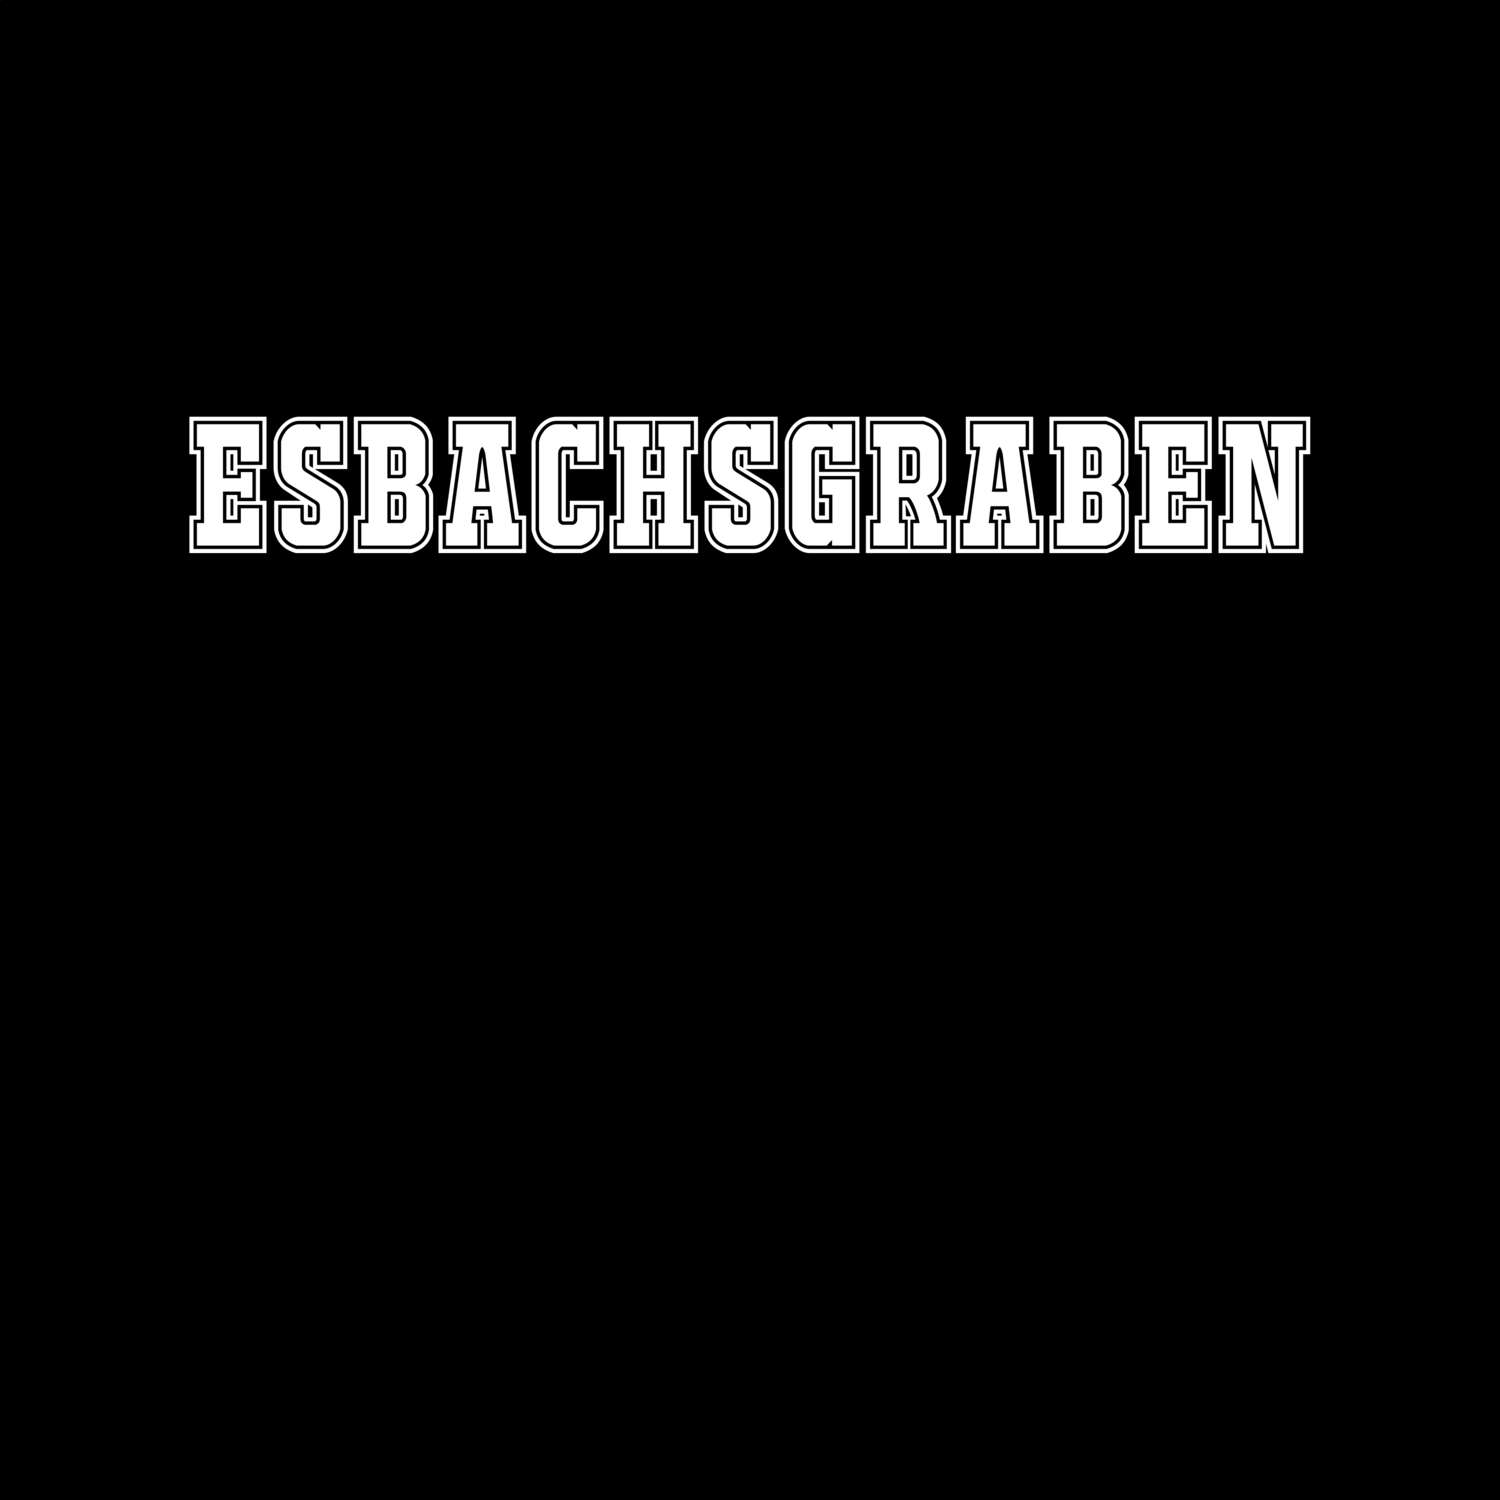 Esbachsgraben T-Shirt »Classic«